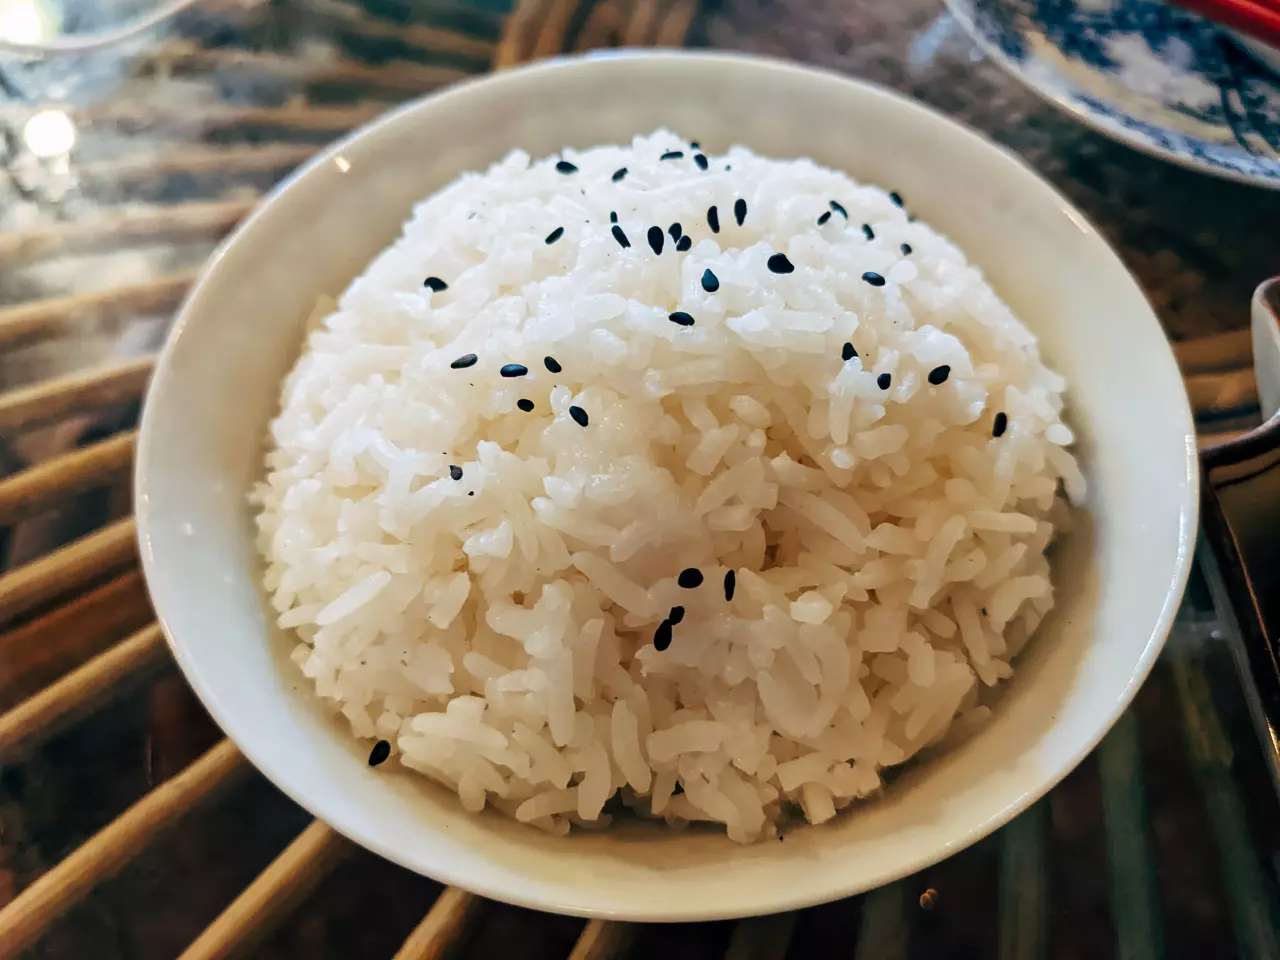 rýže